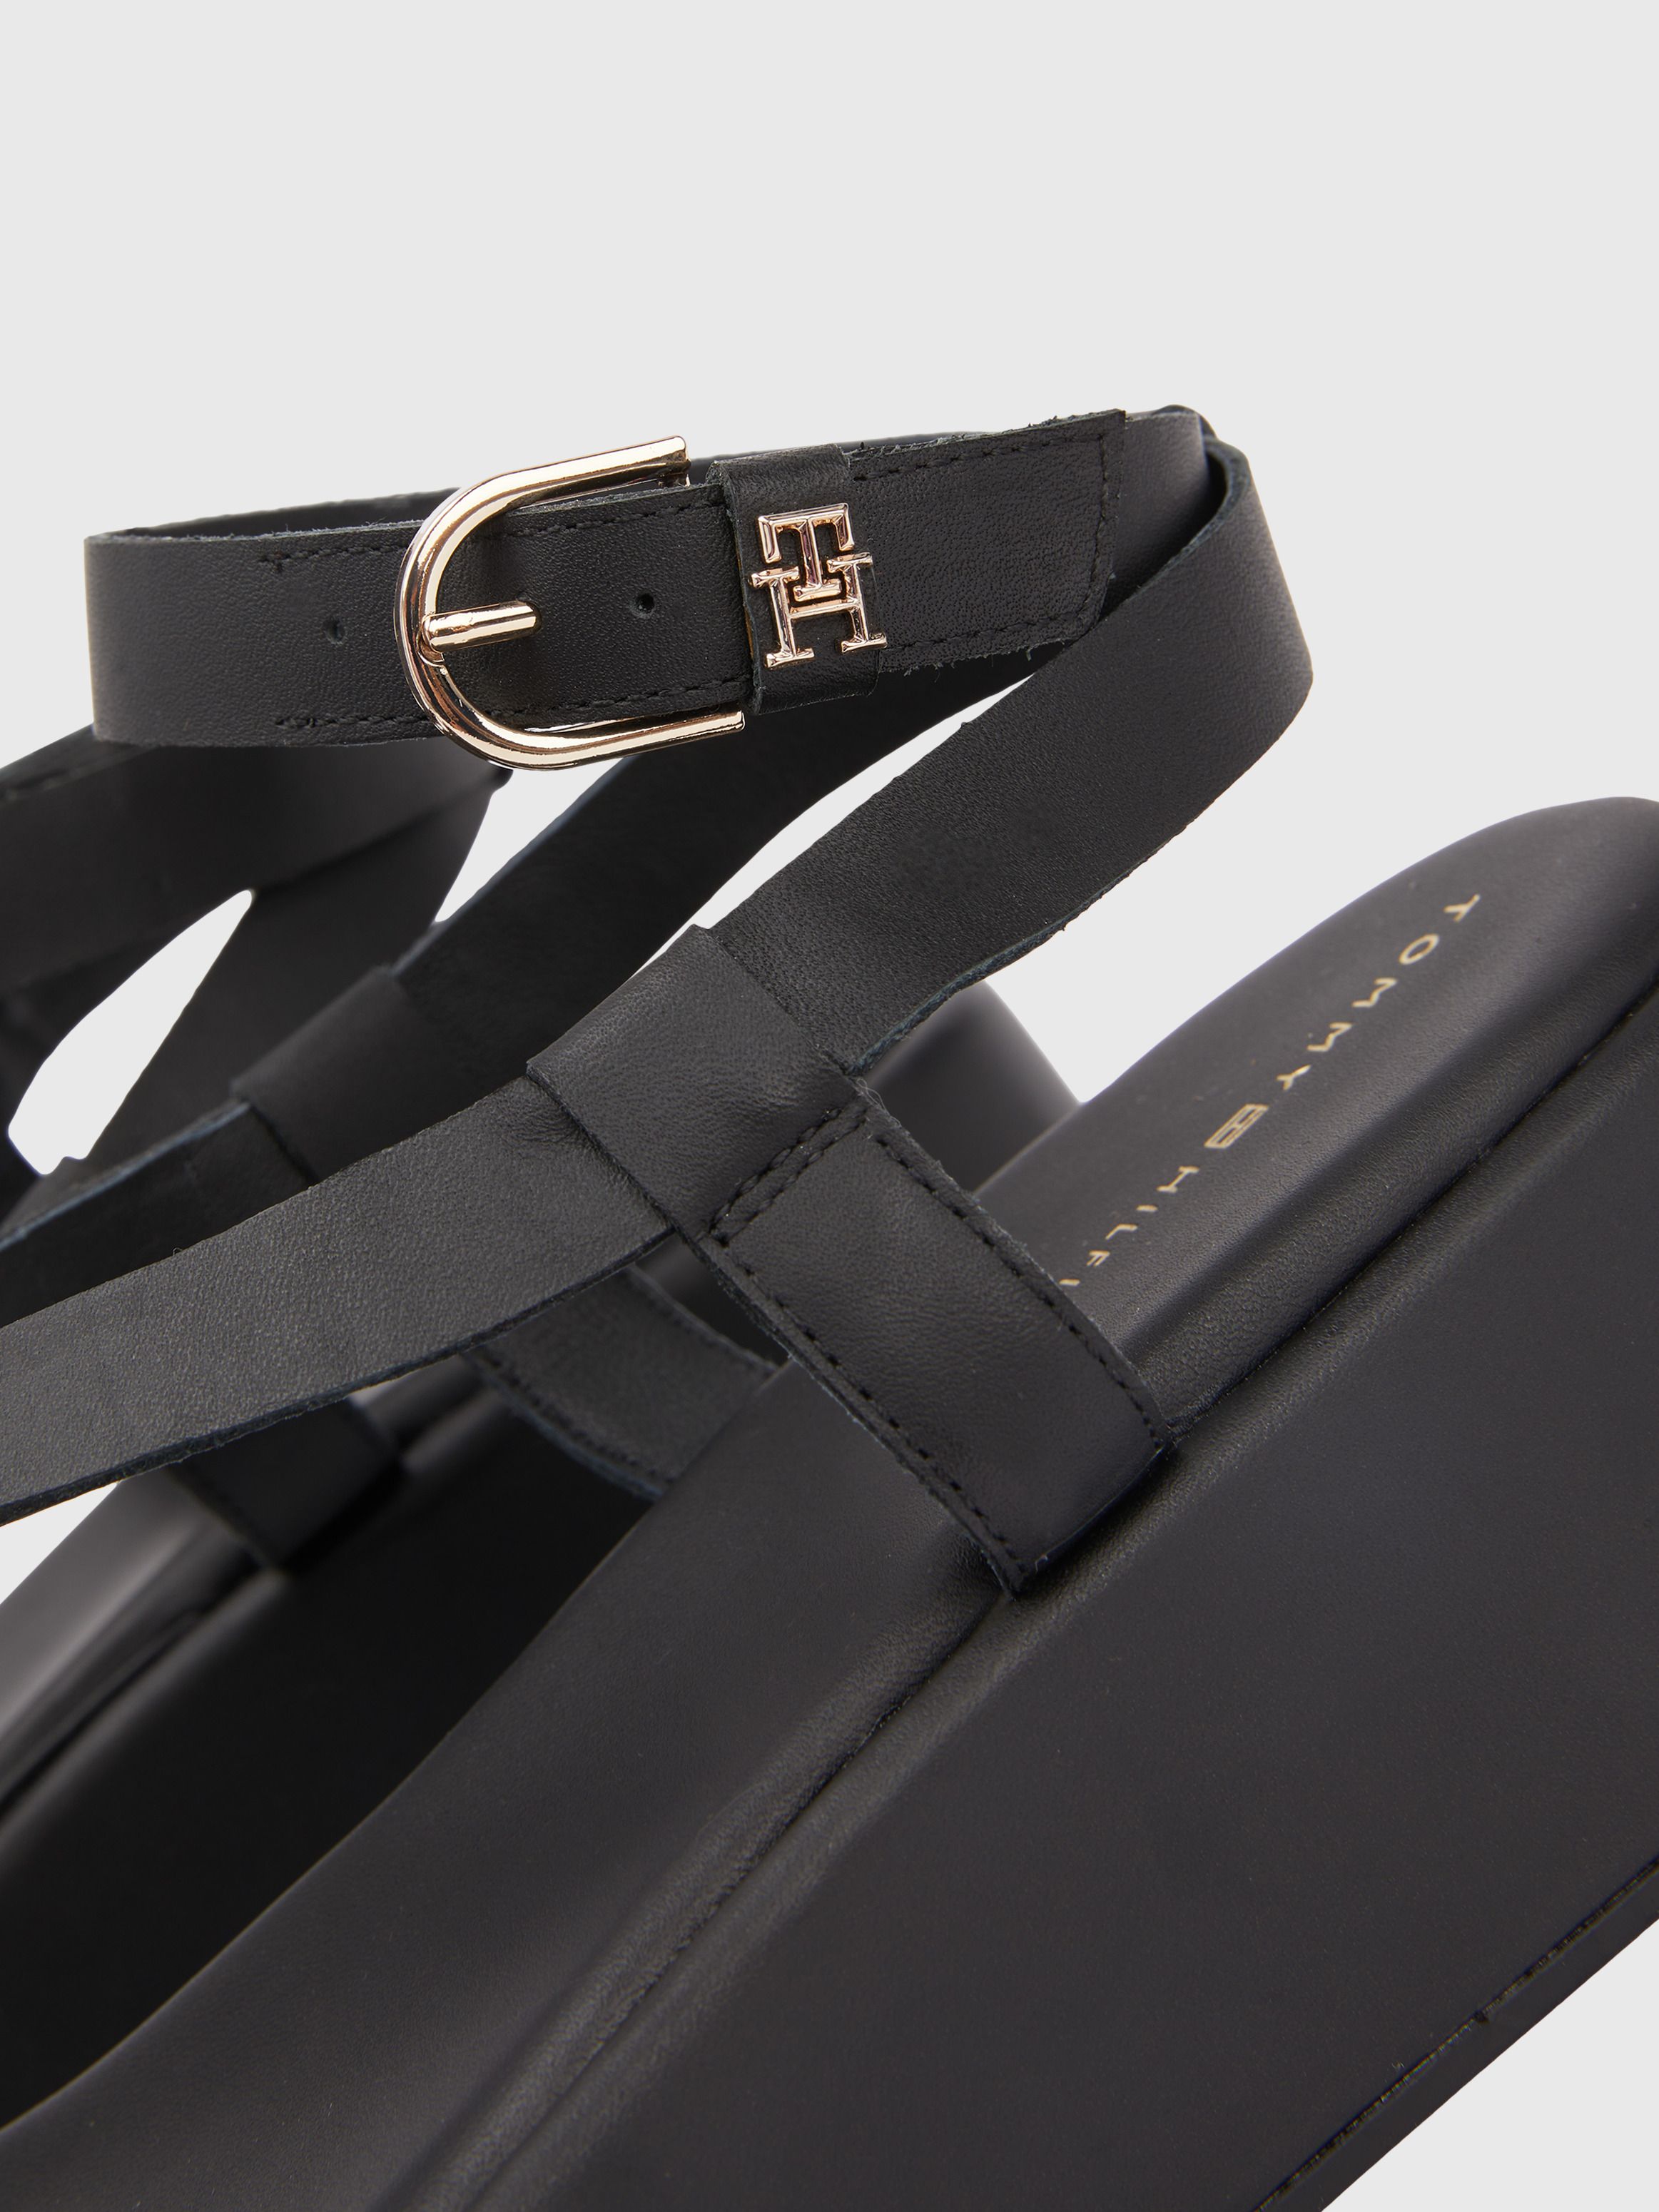 Tommy Hilfiger Women's Leather Strappy Flatform Wedge Sandals